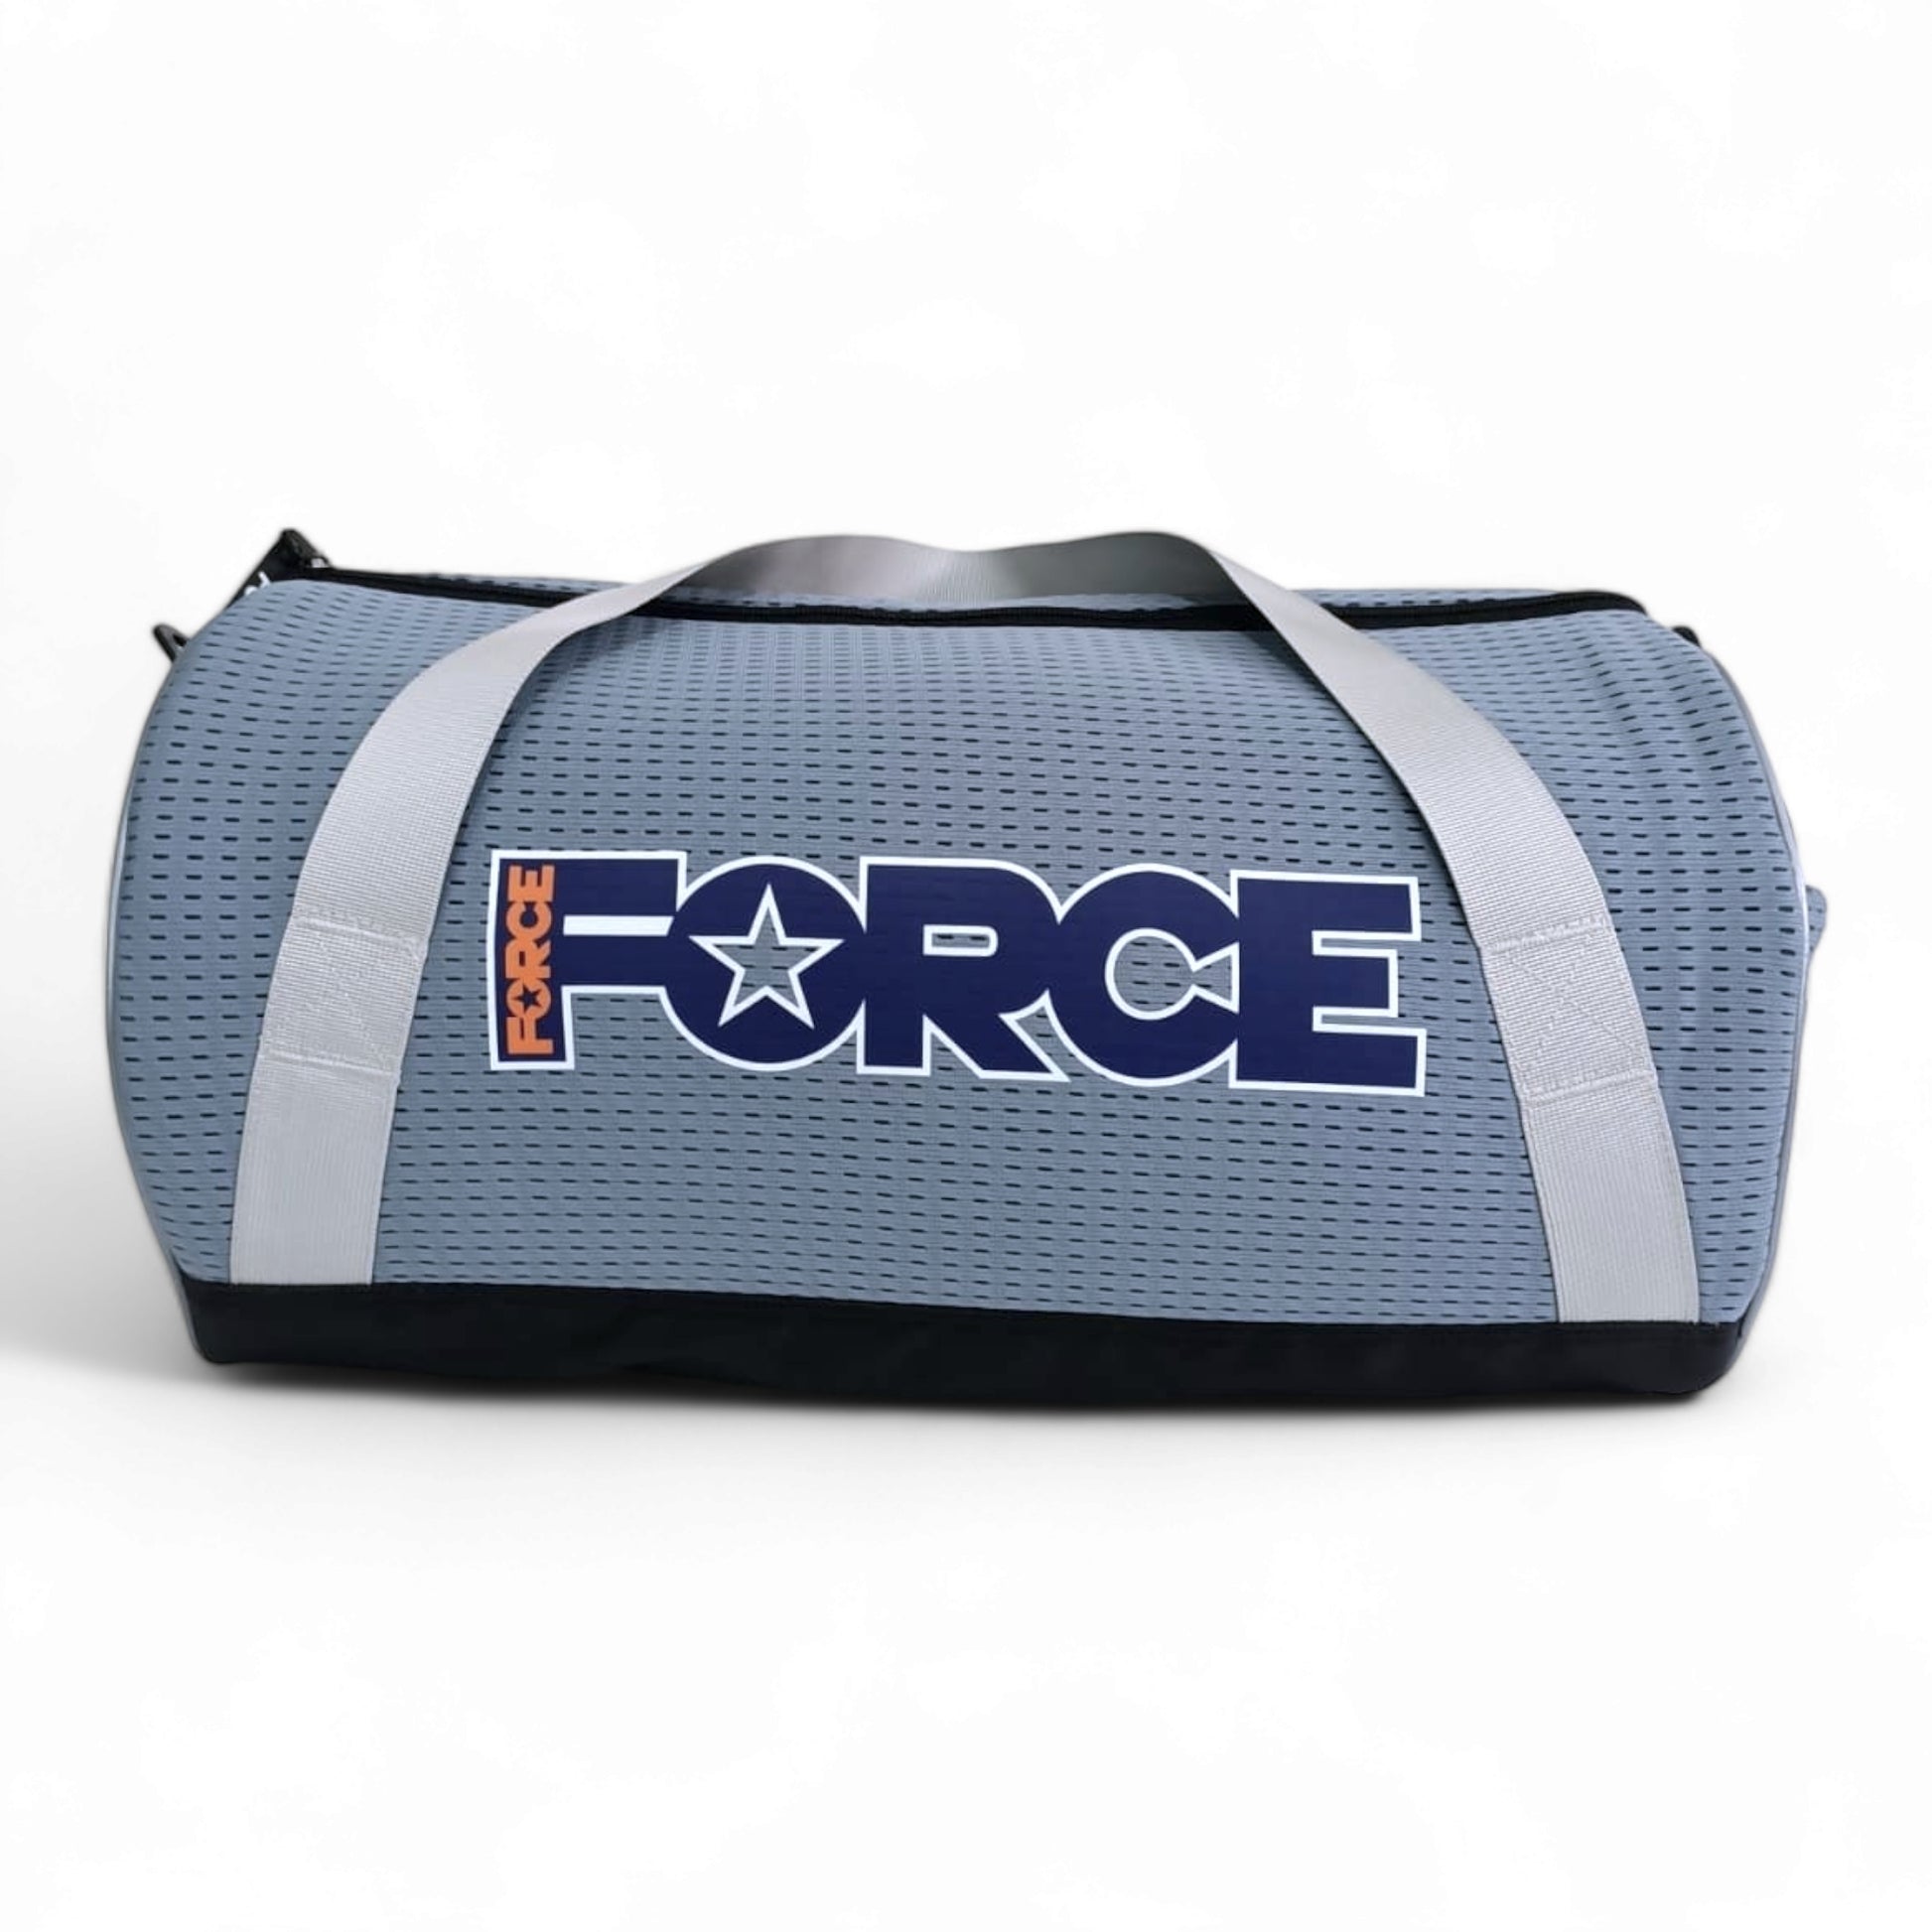 FORCE Sports Bag Mesh - GRAY- GM-107